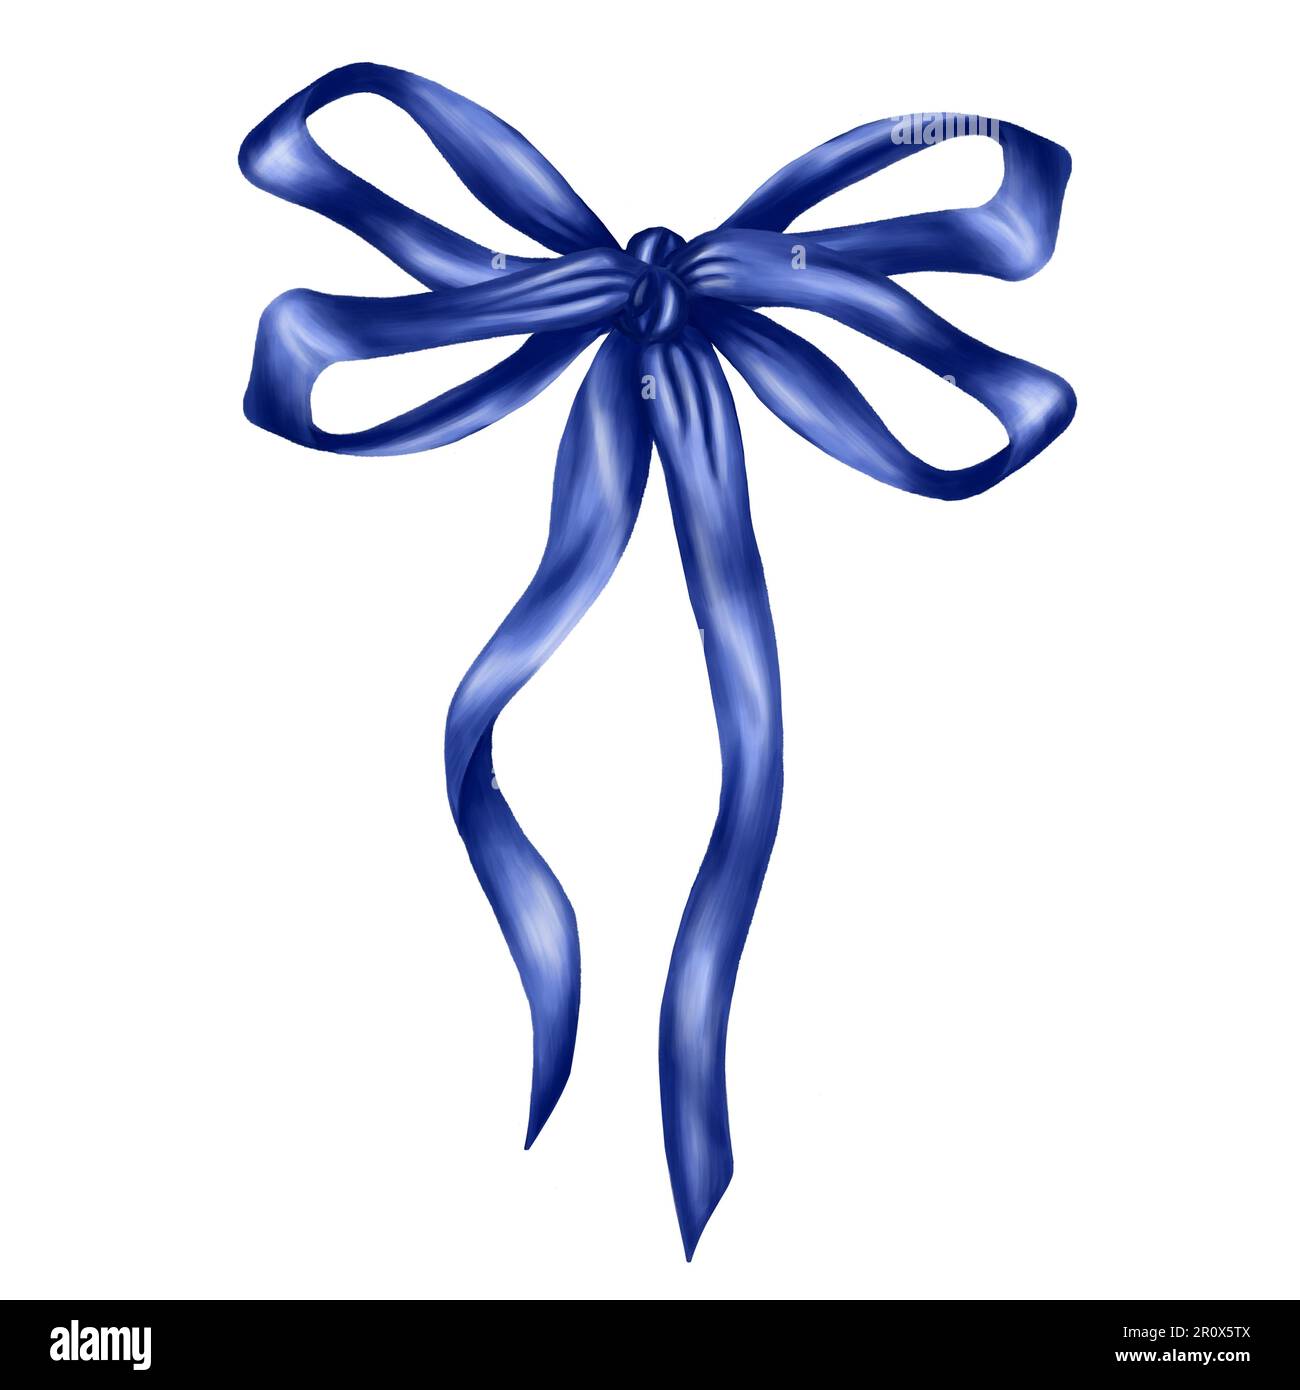 Blue satin bow made of thin smooth ribbon. Digital illustration on